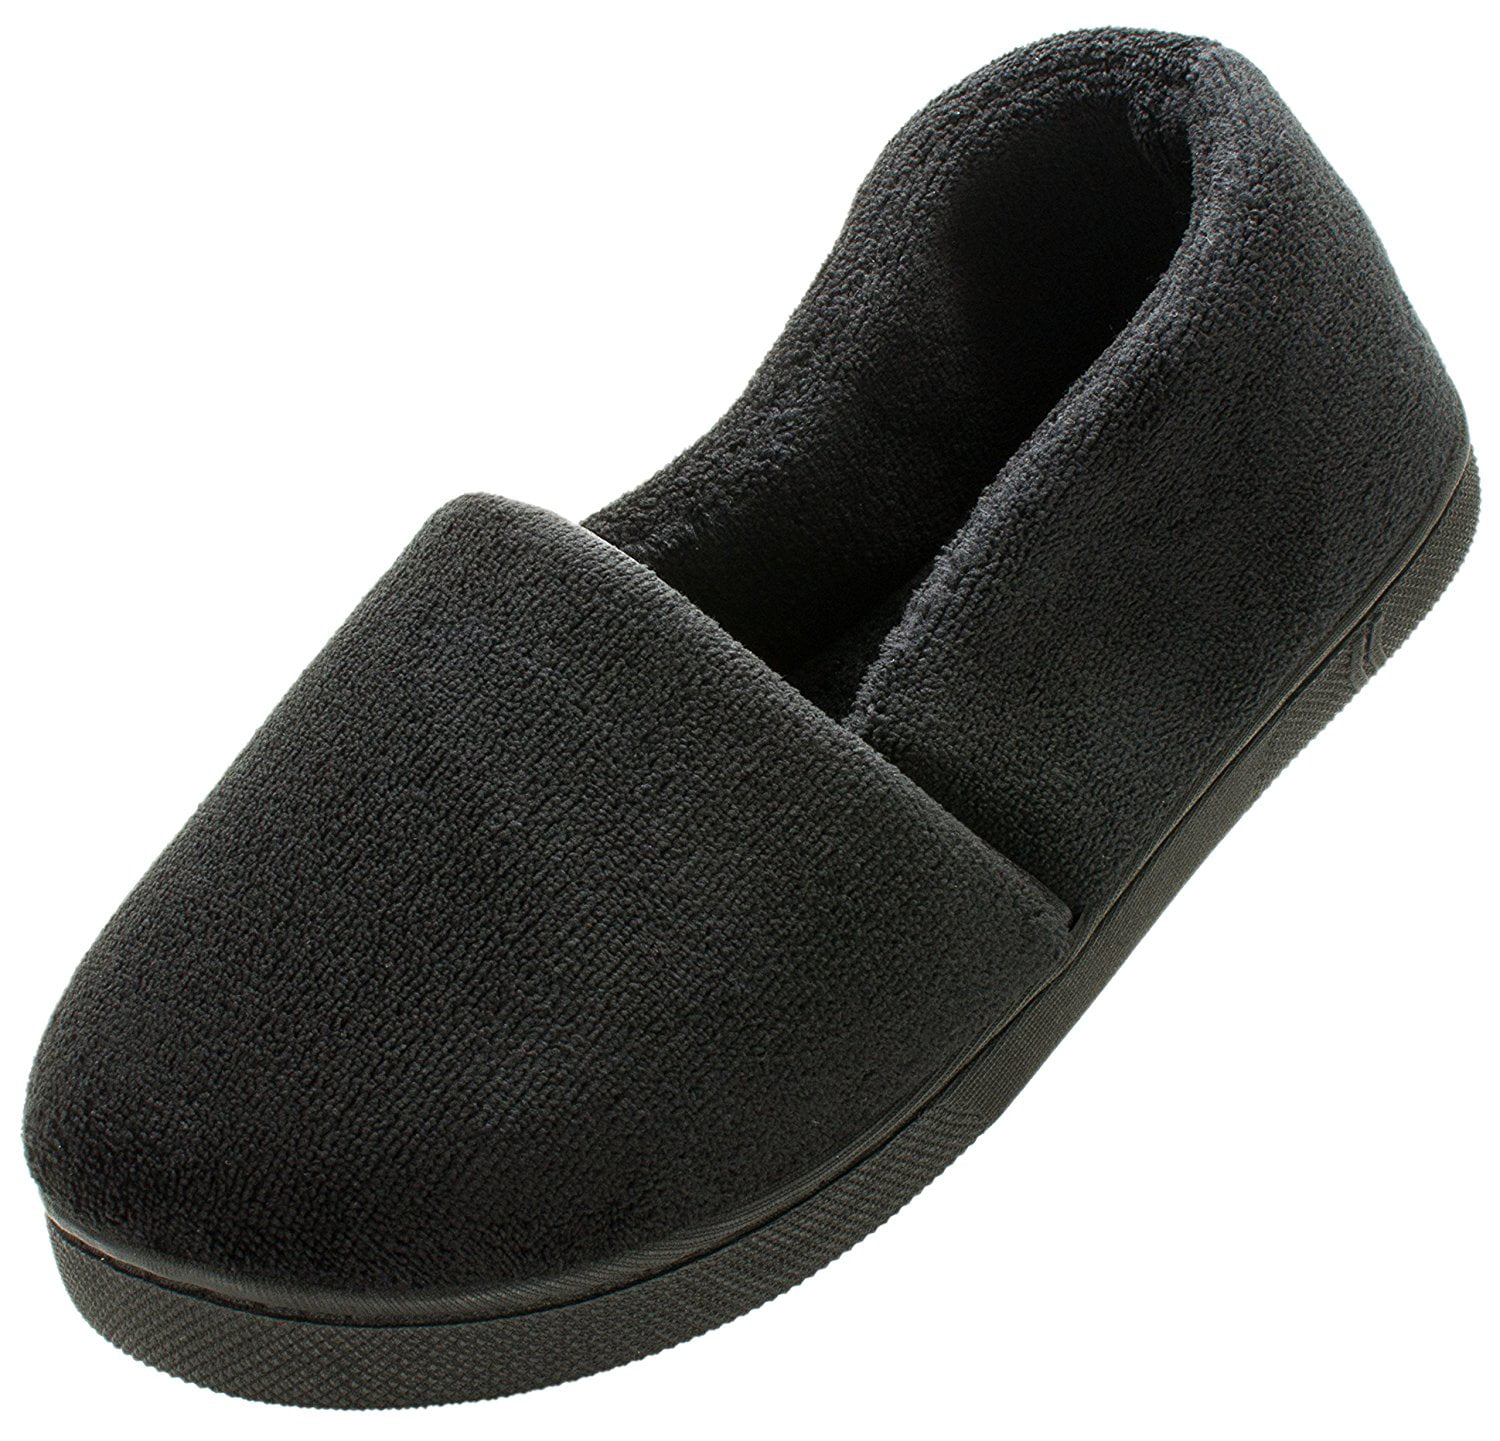 cushion slippers